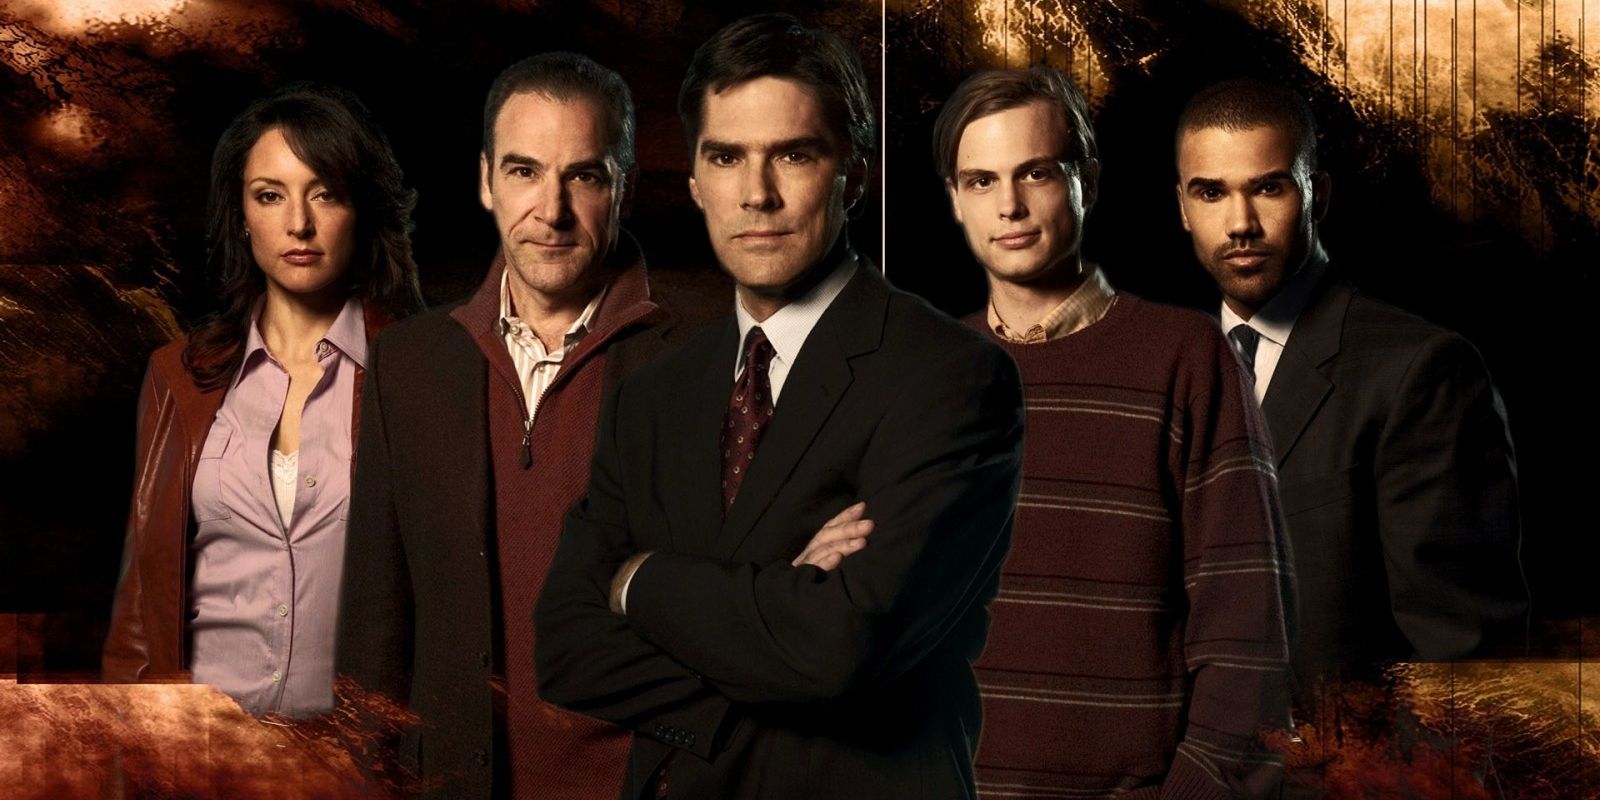 Season 1 line up of Criminal Minds characters Elle, Gideon, Aaron, Spencer, and Derek